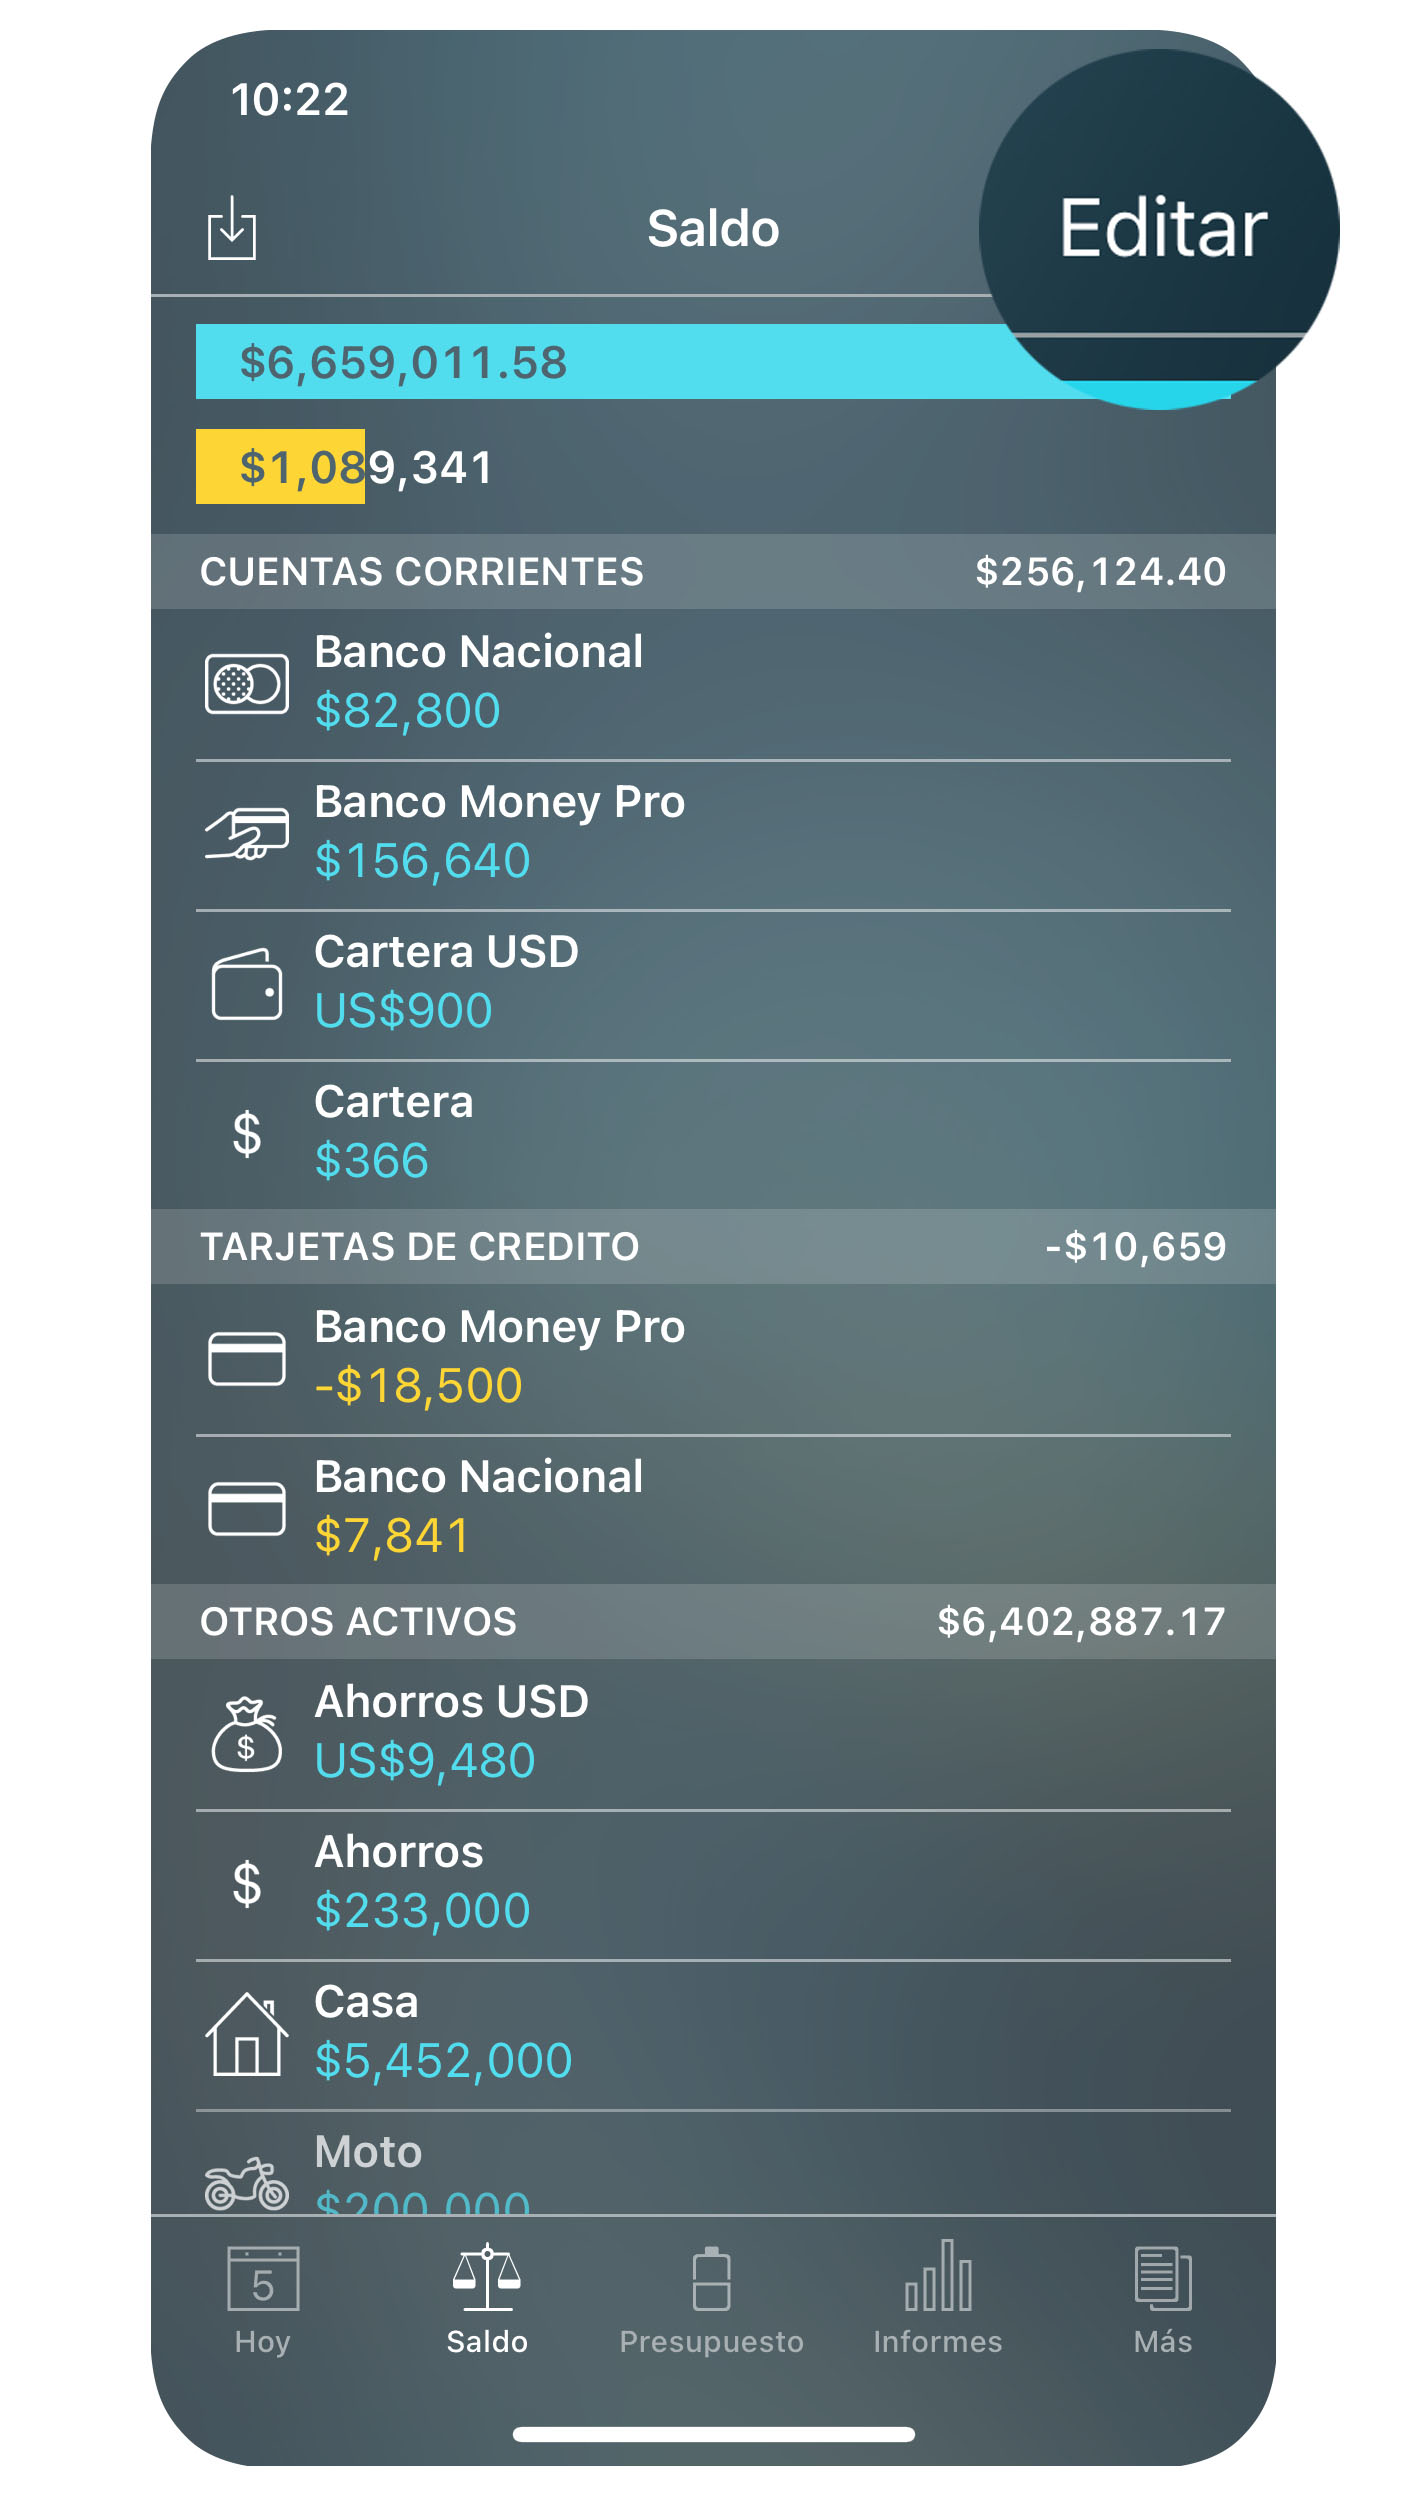 Money Pro - Cuentas (Saldo) - Editar - iPhone